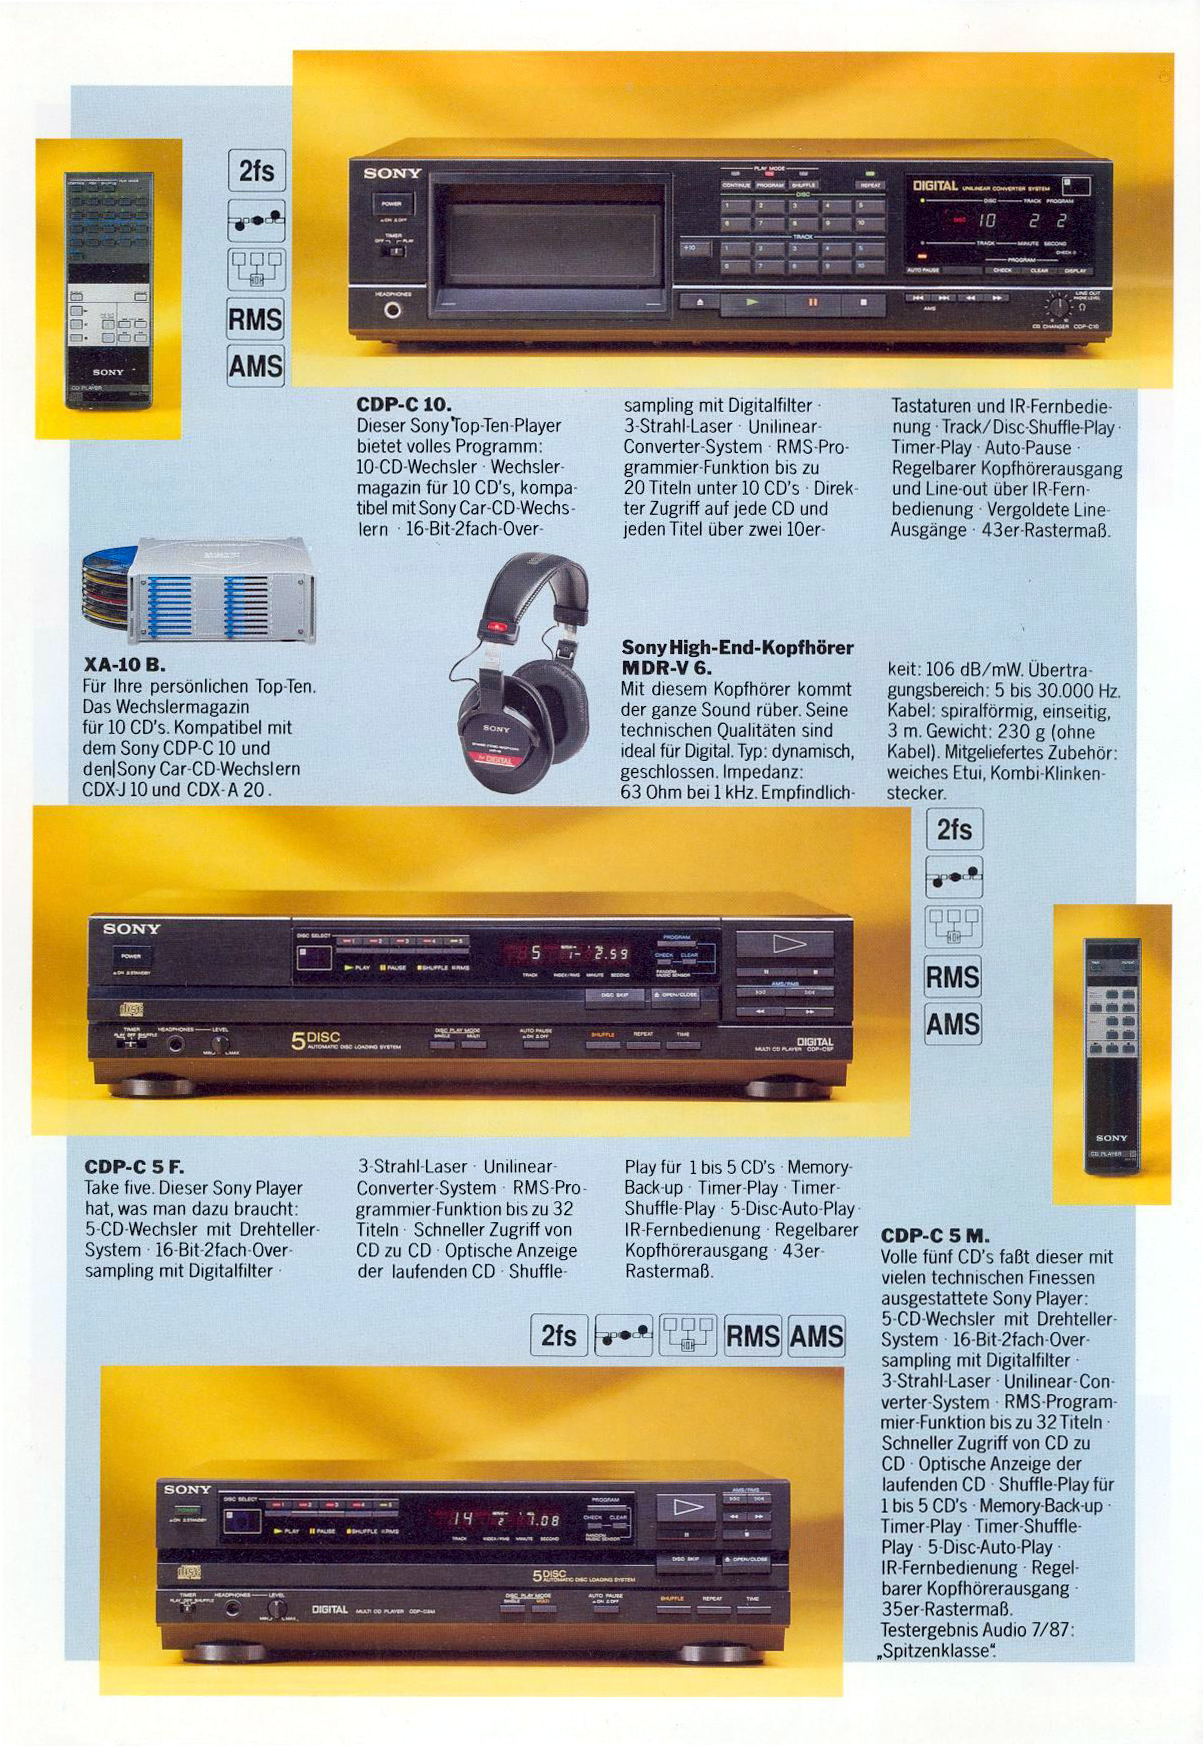 Sony CDP-C 5 F-M-10-Prospekt-1988.jpg